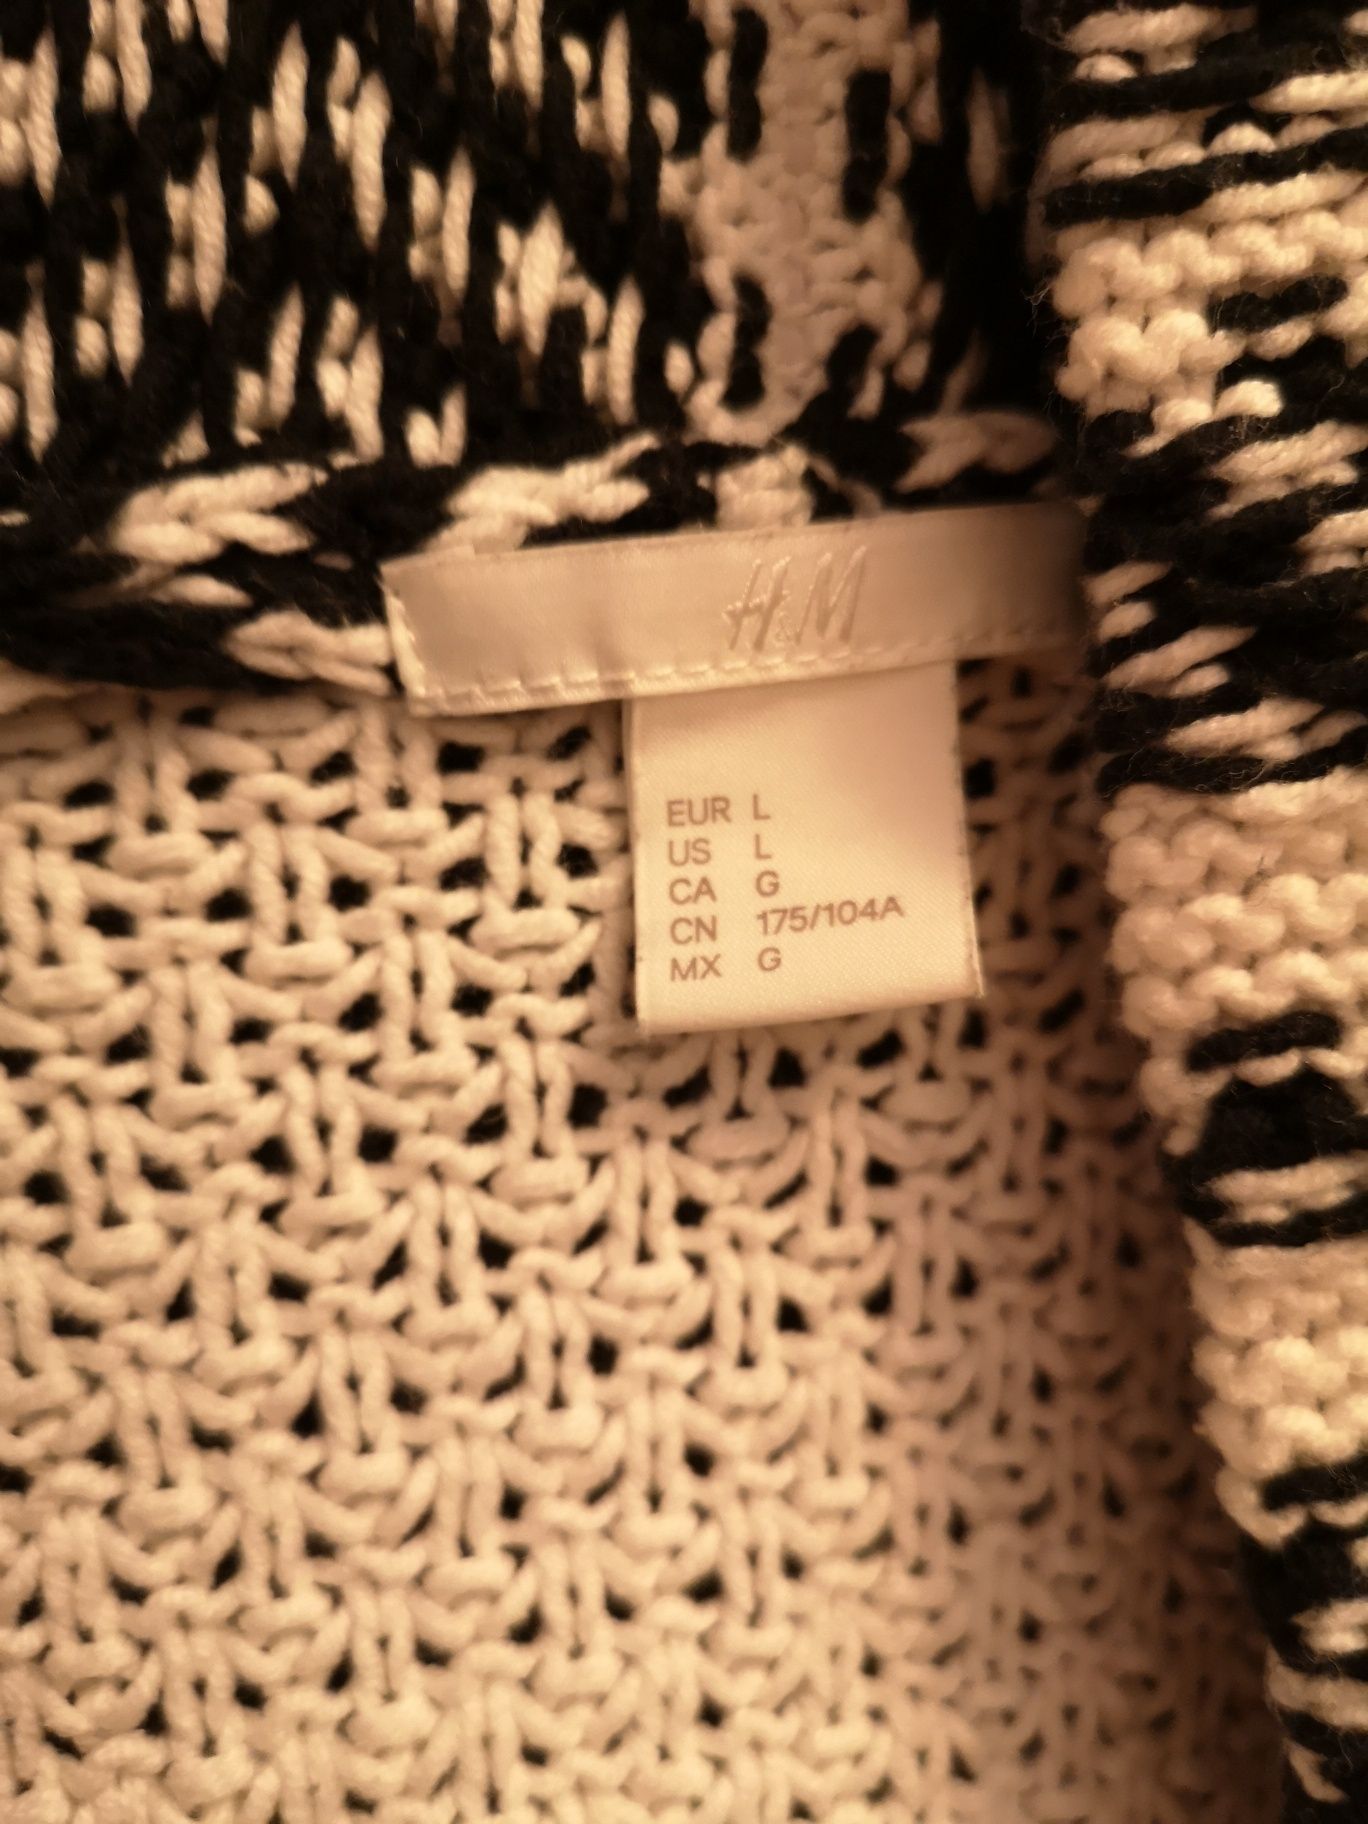 Sweter H&M rozmiar L 175/104A